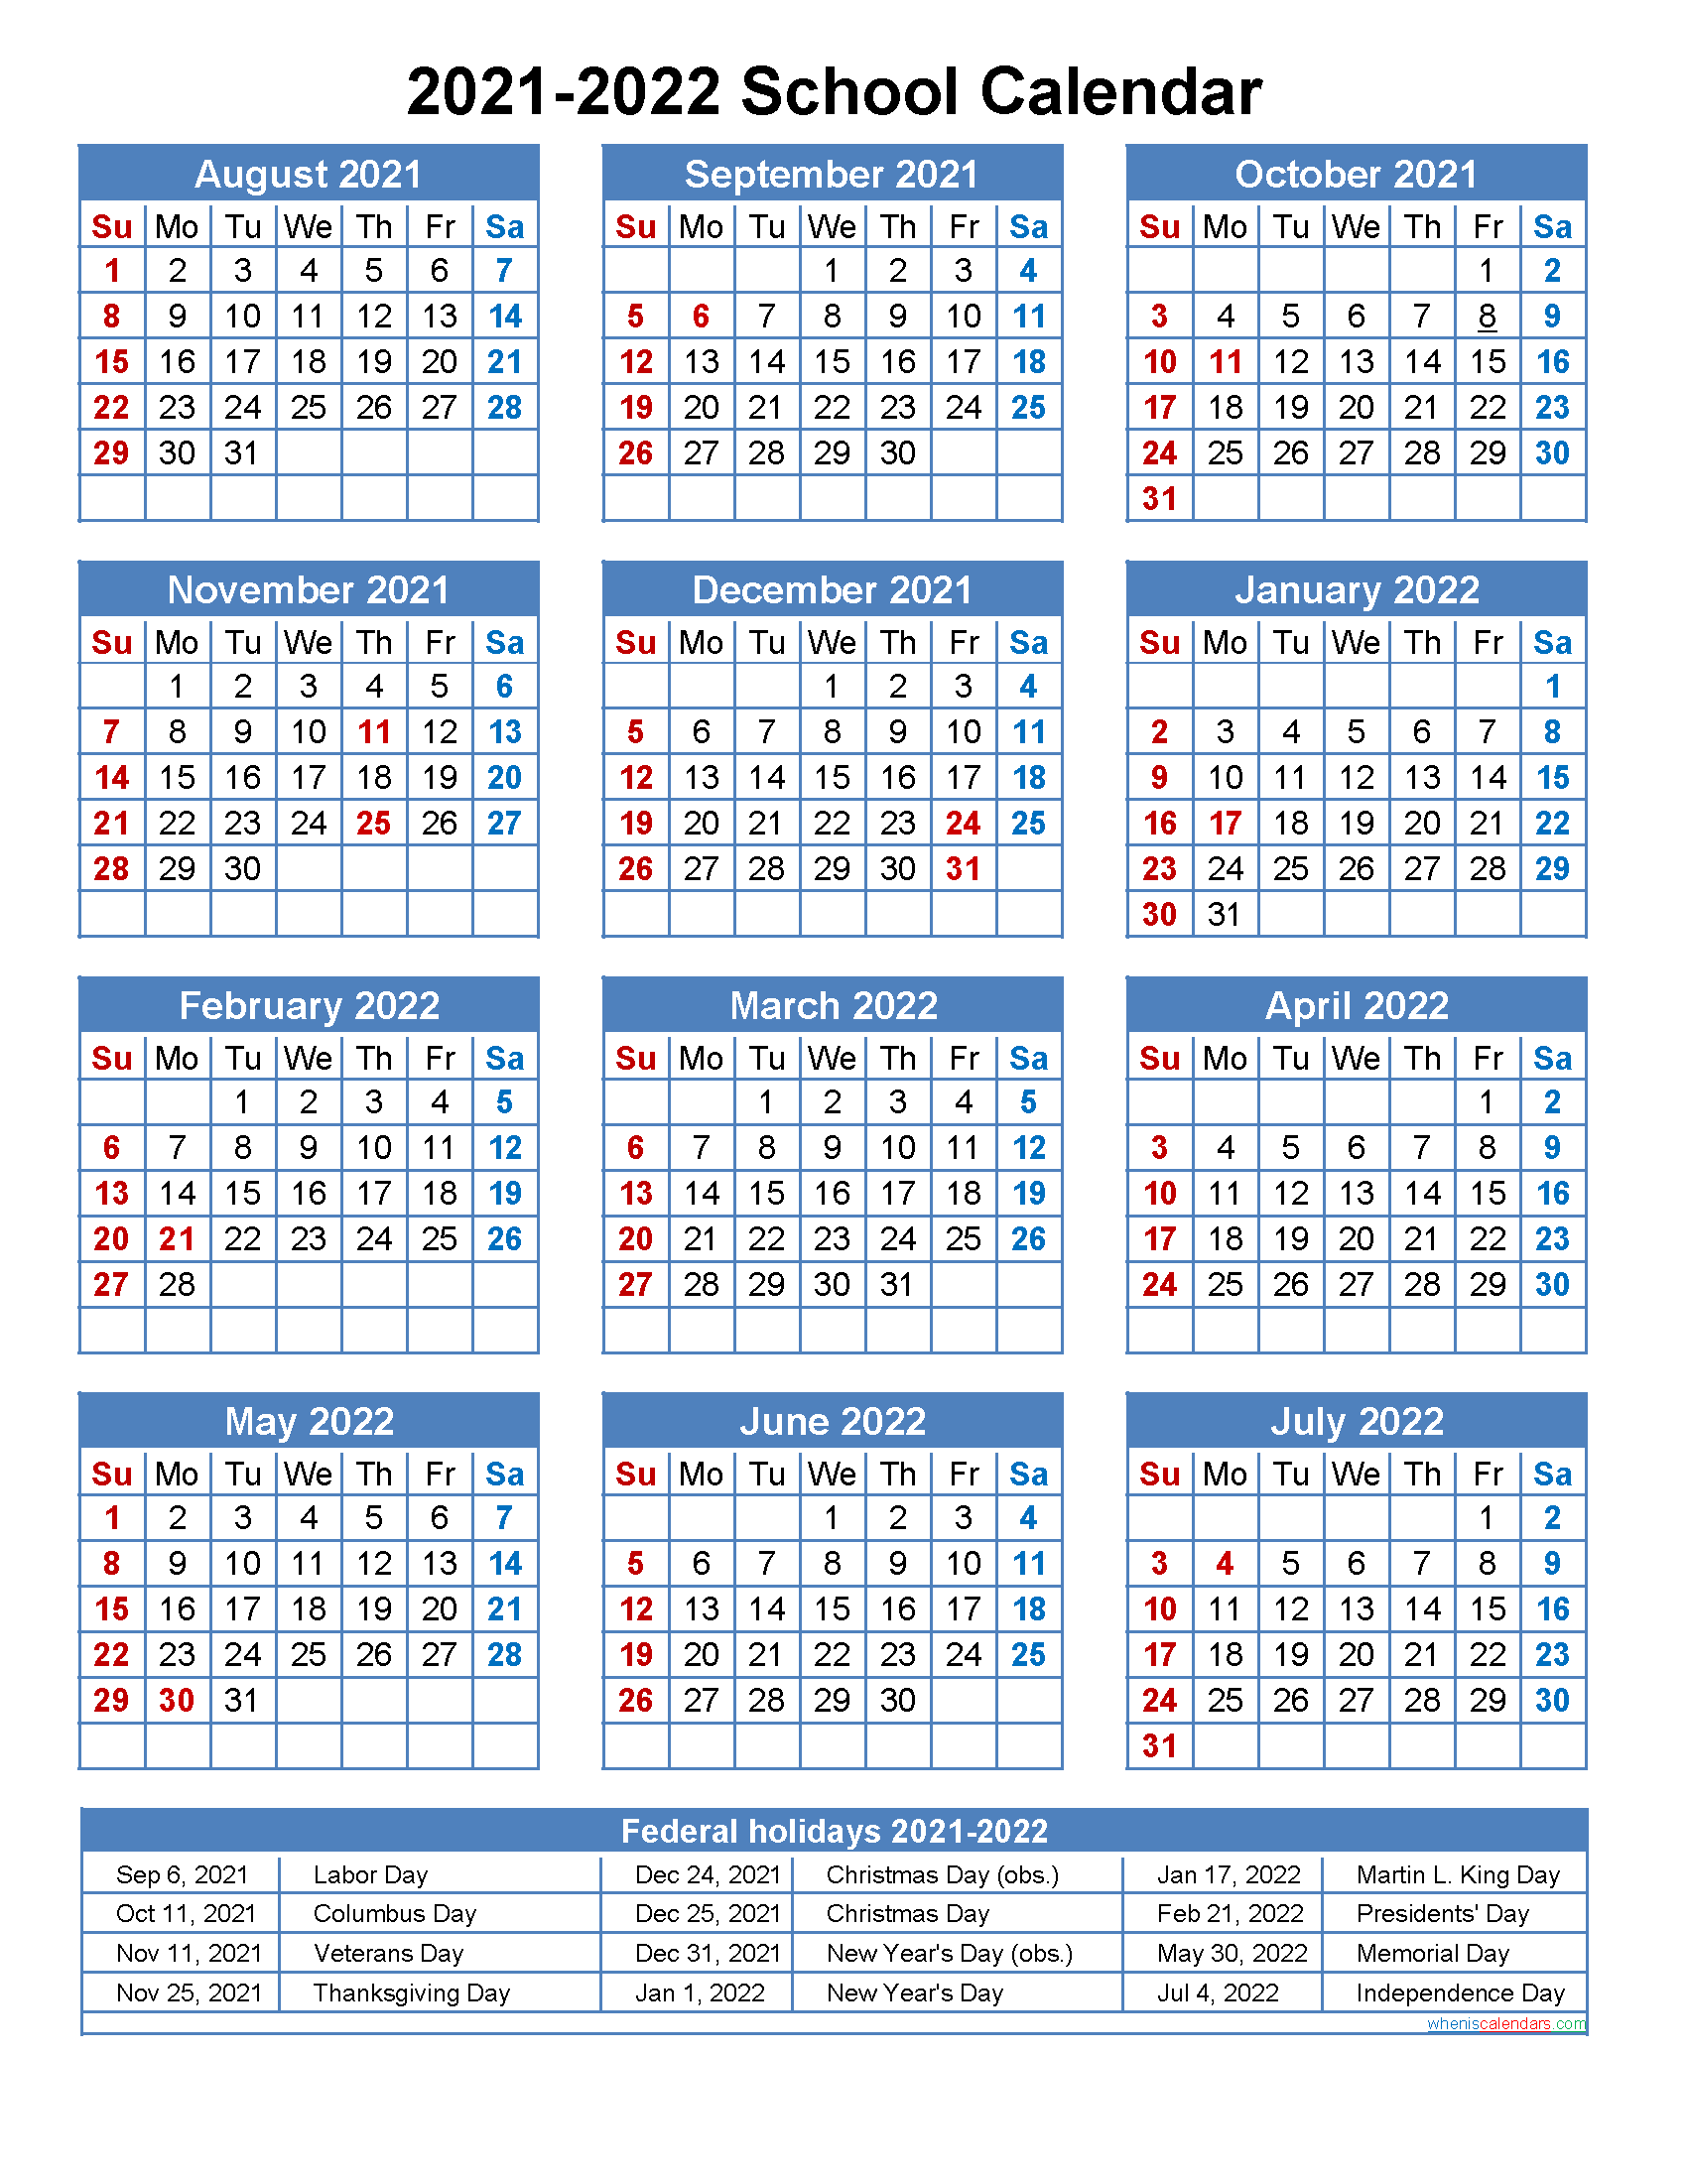 Free School Calendar 2021 To 2022 PDF And Image